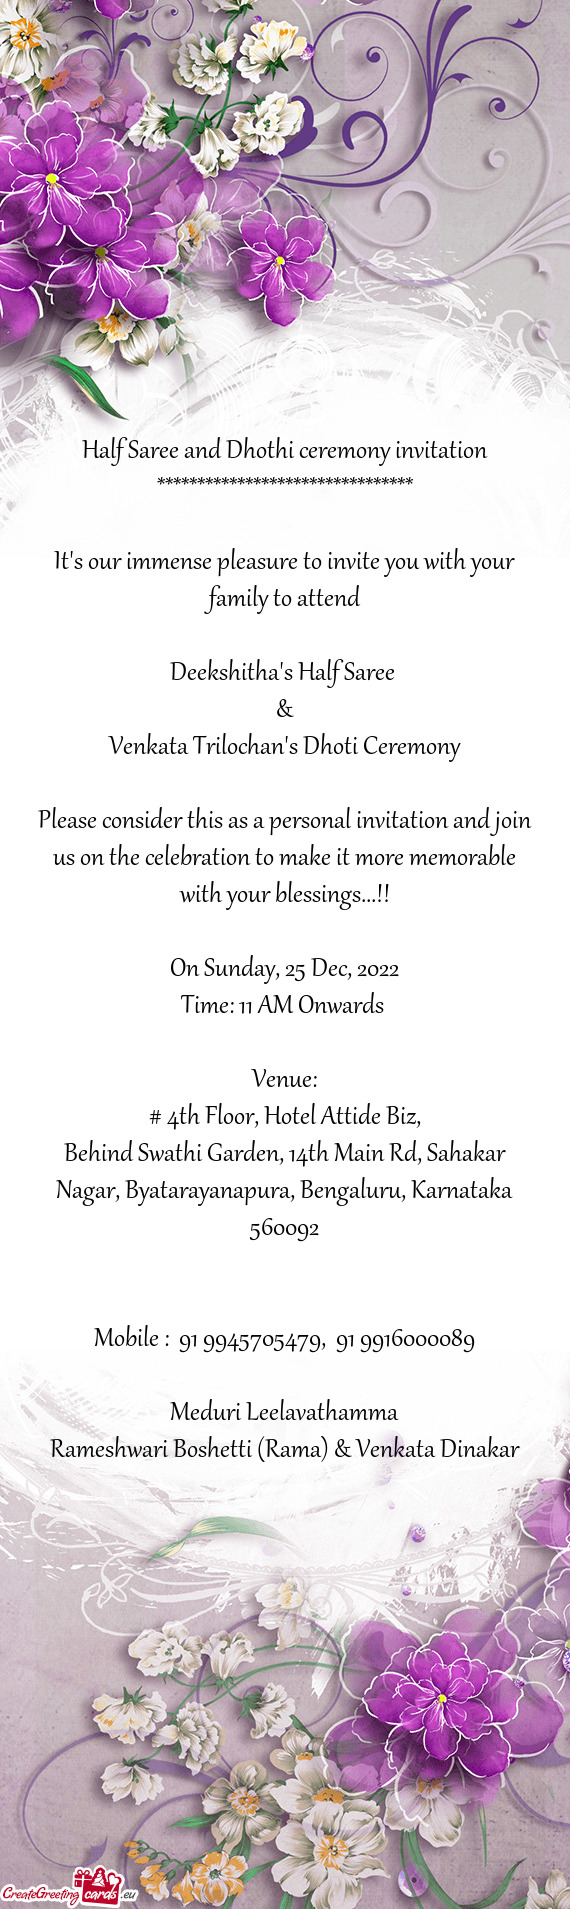 Half Saree and Dhothi ceremony invitation